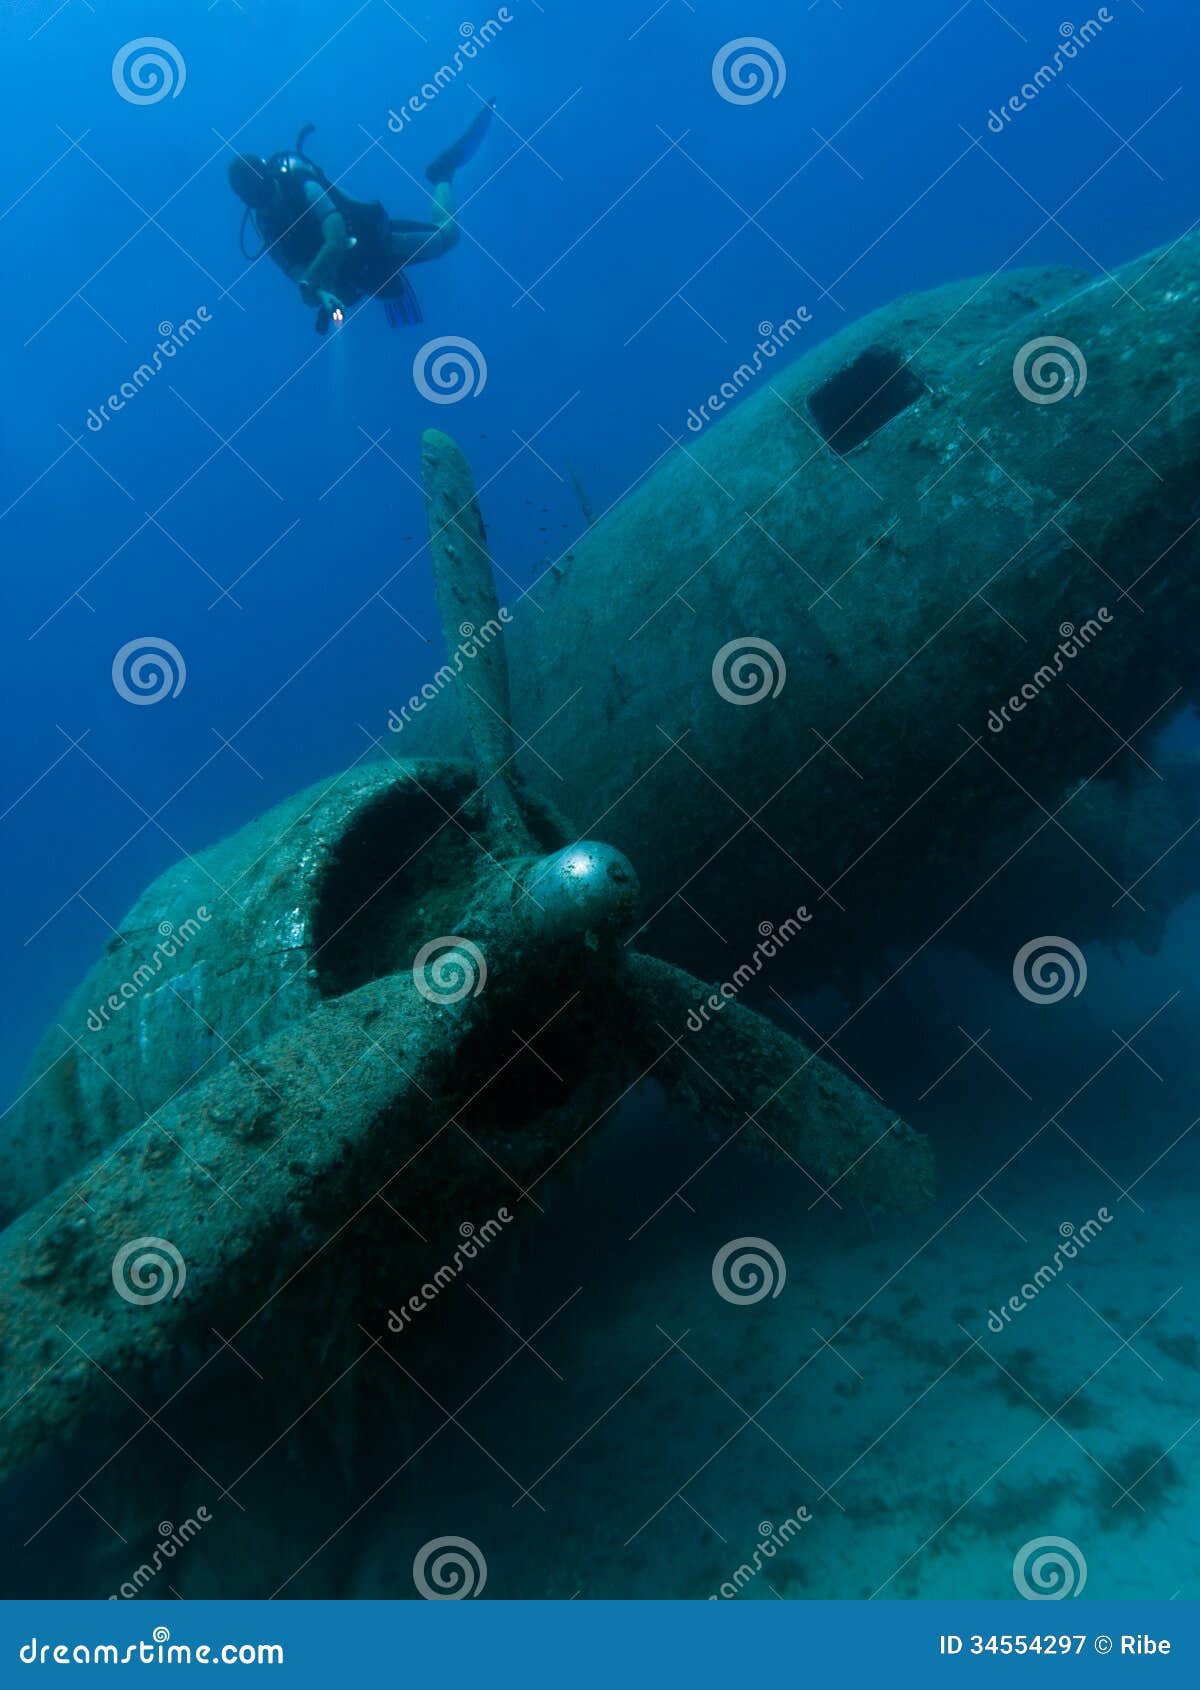 diver exploring wreck of aircraft